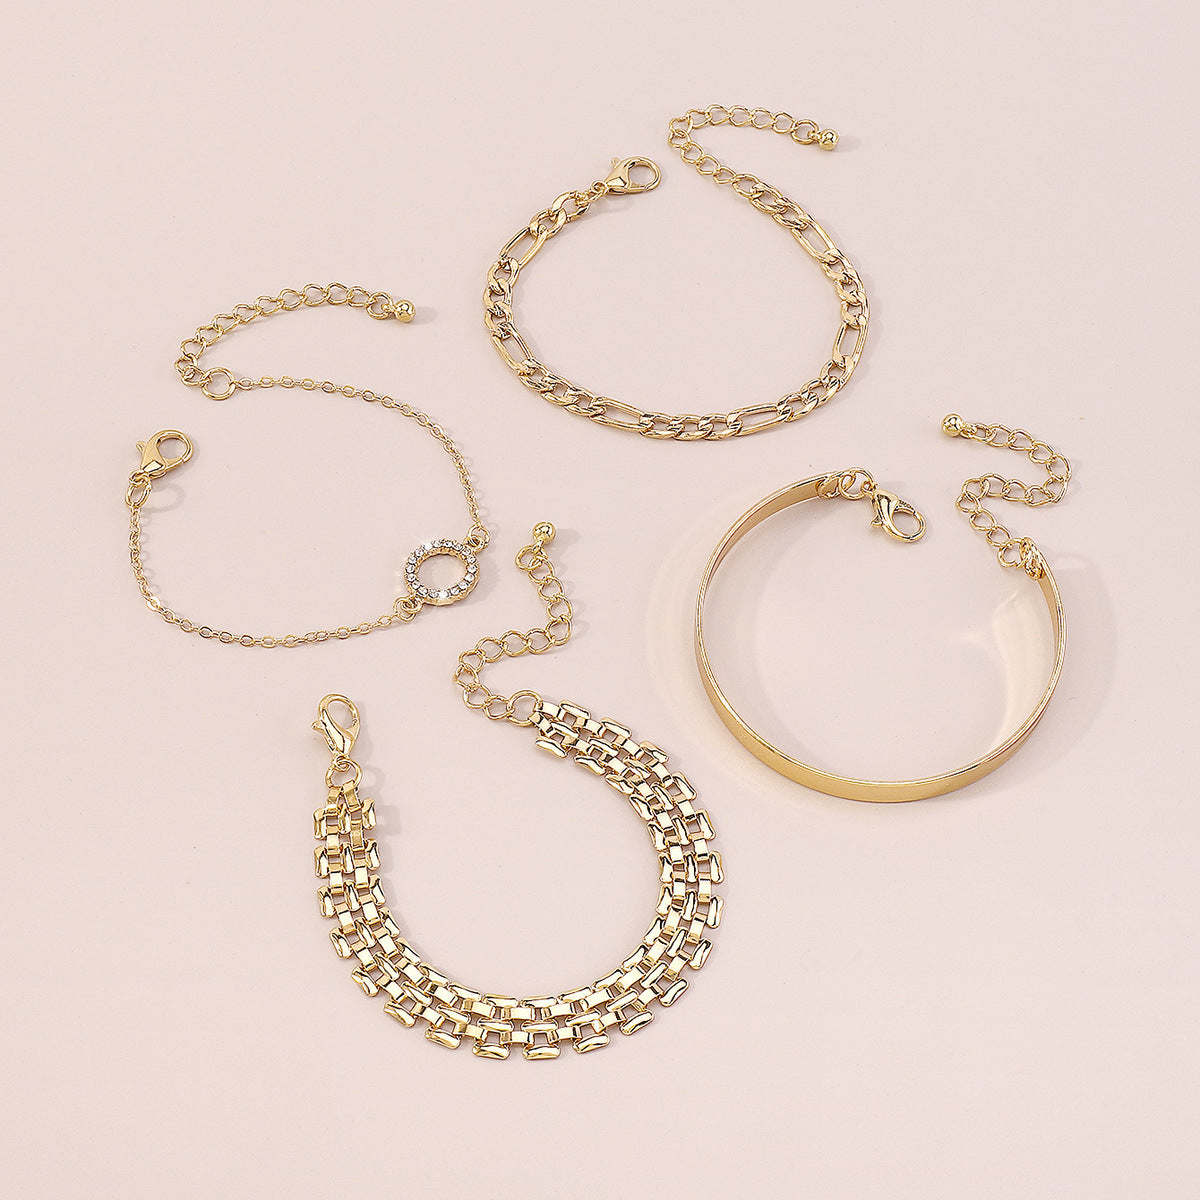 Cubic Zirconia & 18K Gold-Plated Chain & Bangle Bracelet Set